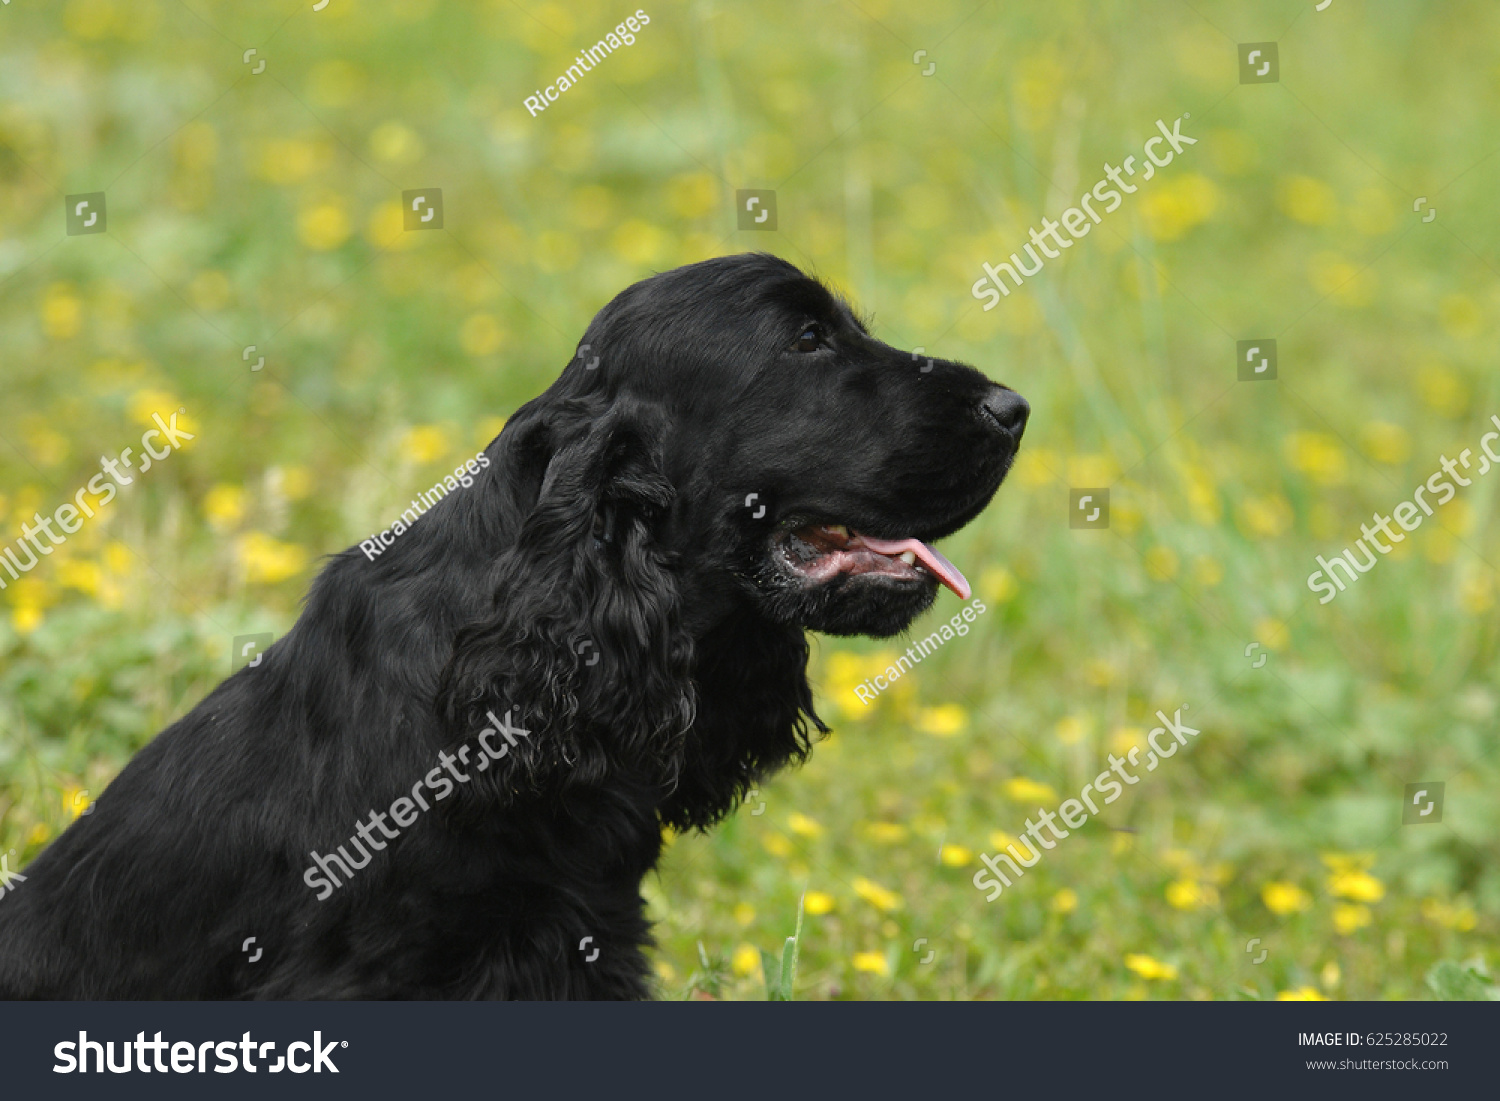 Portrait English Black Cocker Spaniel Dog Animals Wildlife Stock Image 625285022